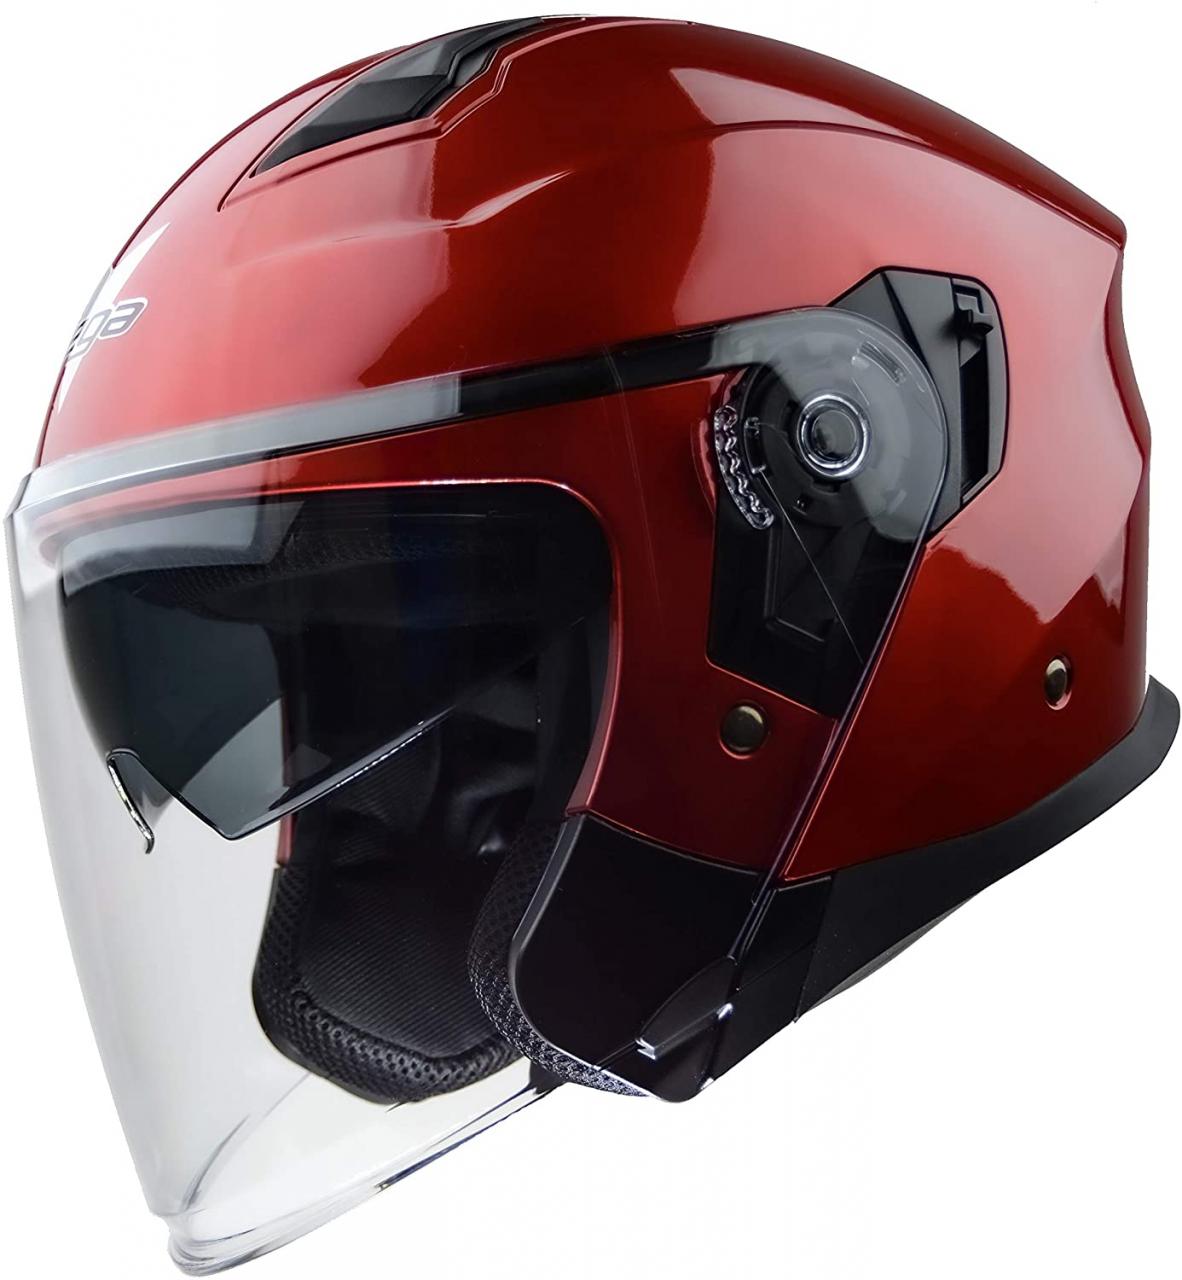 Buy Vega Helmets Unisex-Adult Open Face Motorcycle Helmet Online in Hong  Kong. B07ZPFDLPZ